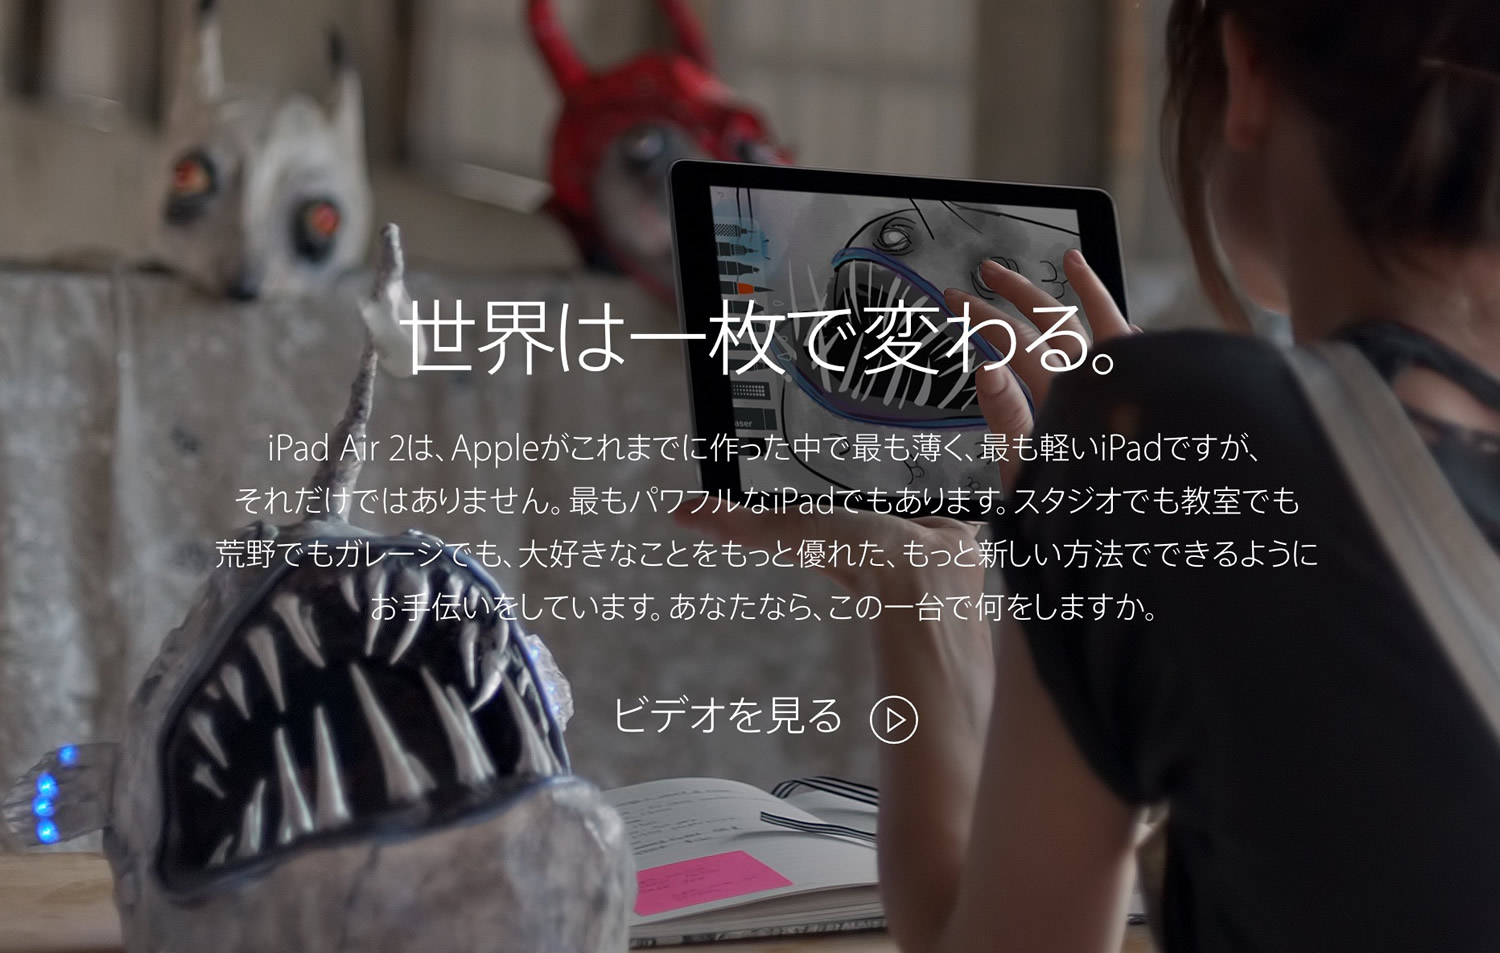 Apple Japan、｢iPad Air 2｣のTVCM『Change』の日本版を公開